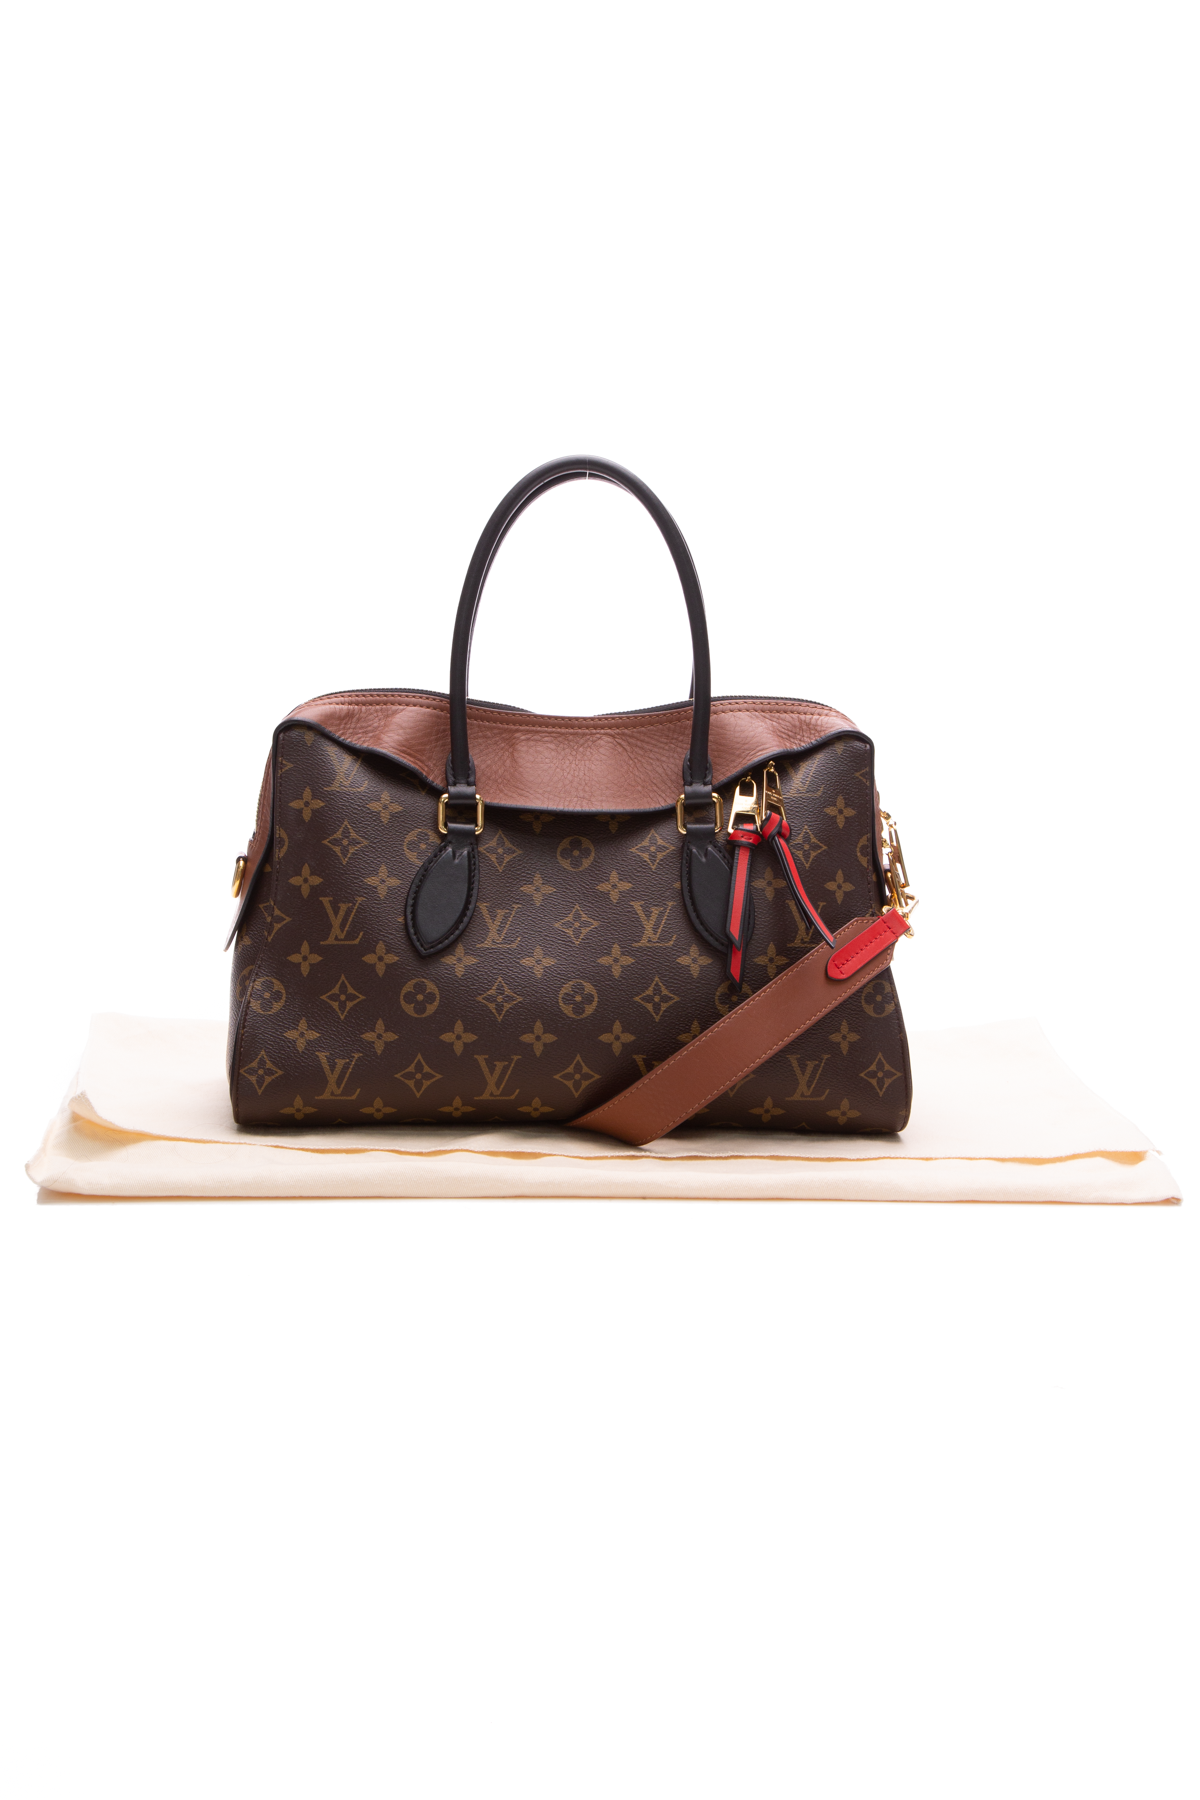 Louis Vuitton, Bags, Louis Vuitton Tuileries Bag